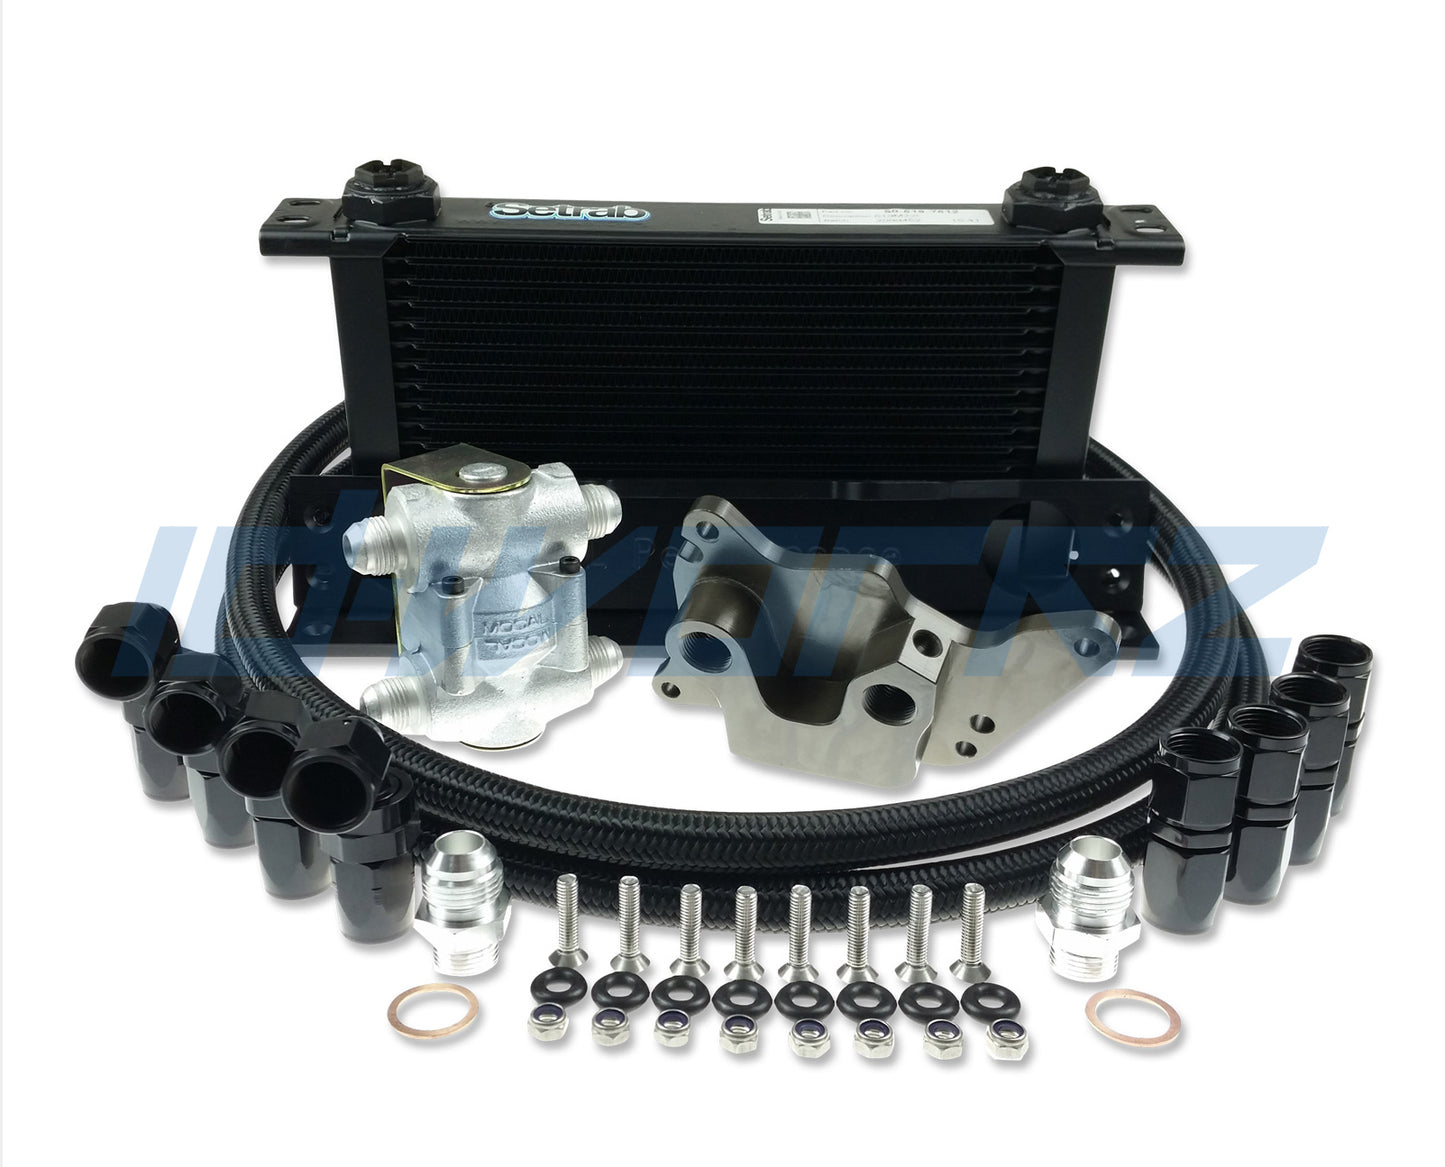 HEL Performance Oil Cooler Kit - BMW 4 Series F32, F33, F36 N55 Engines